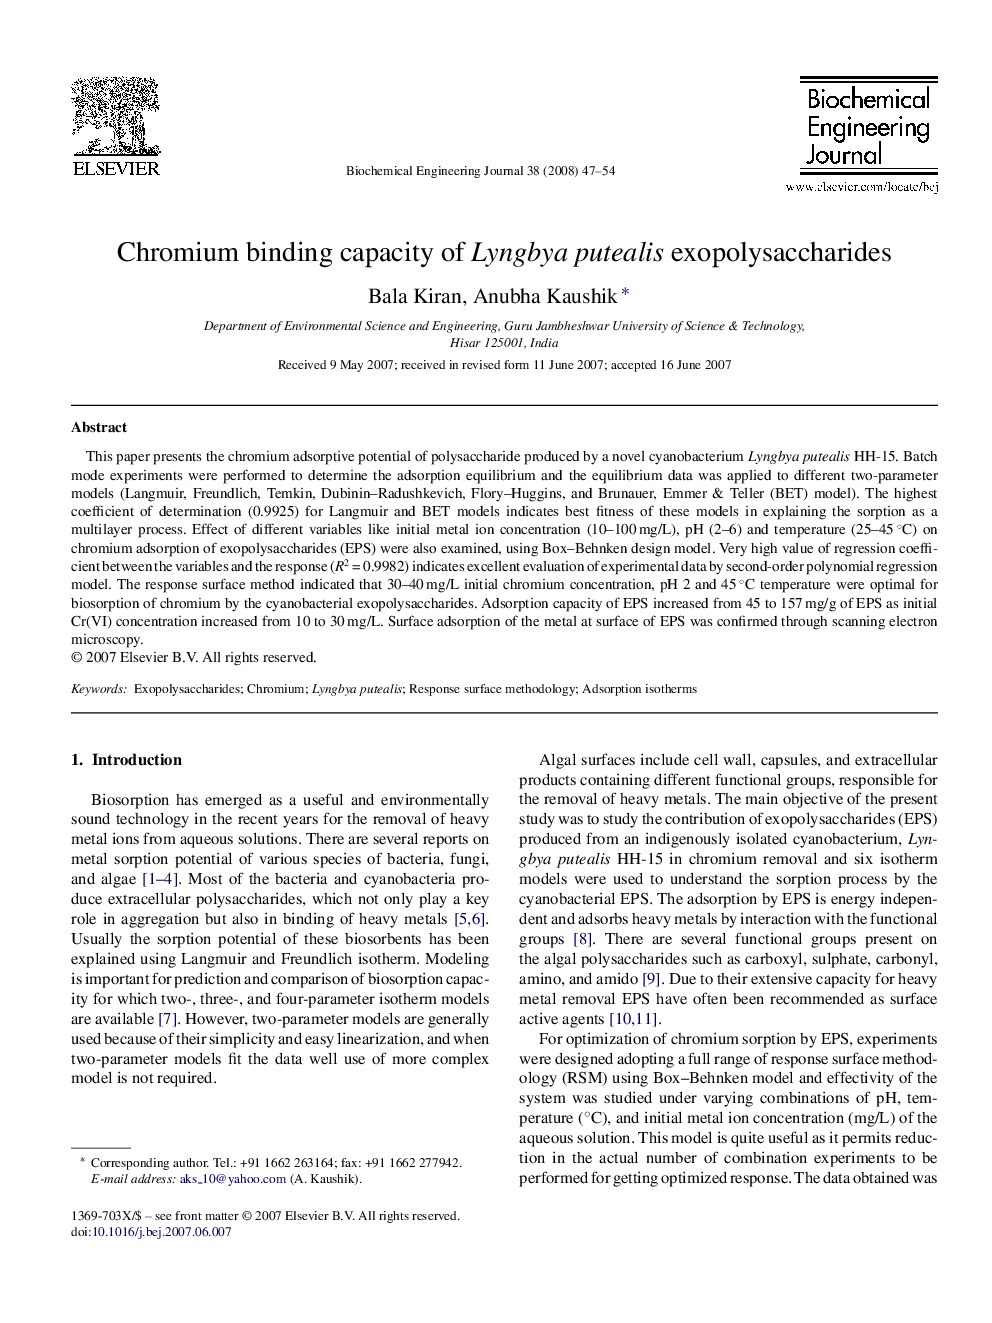 Chromium binding capacity of Lyngbya putealis exopolysaccharides